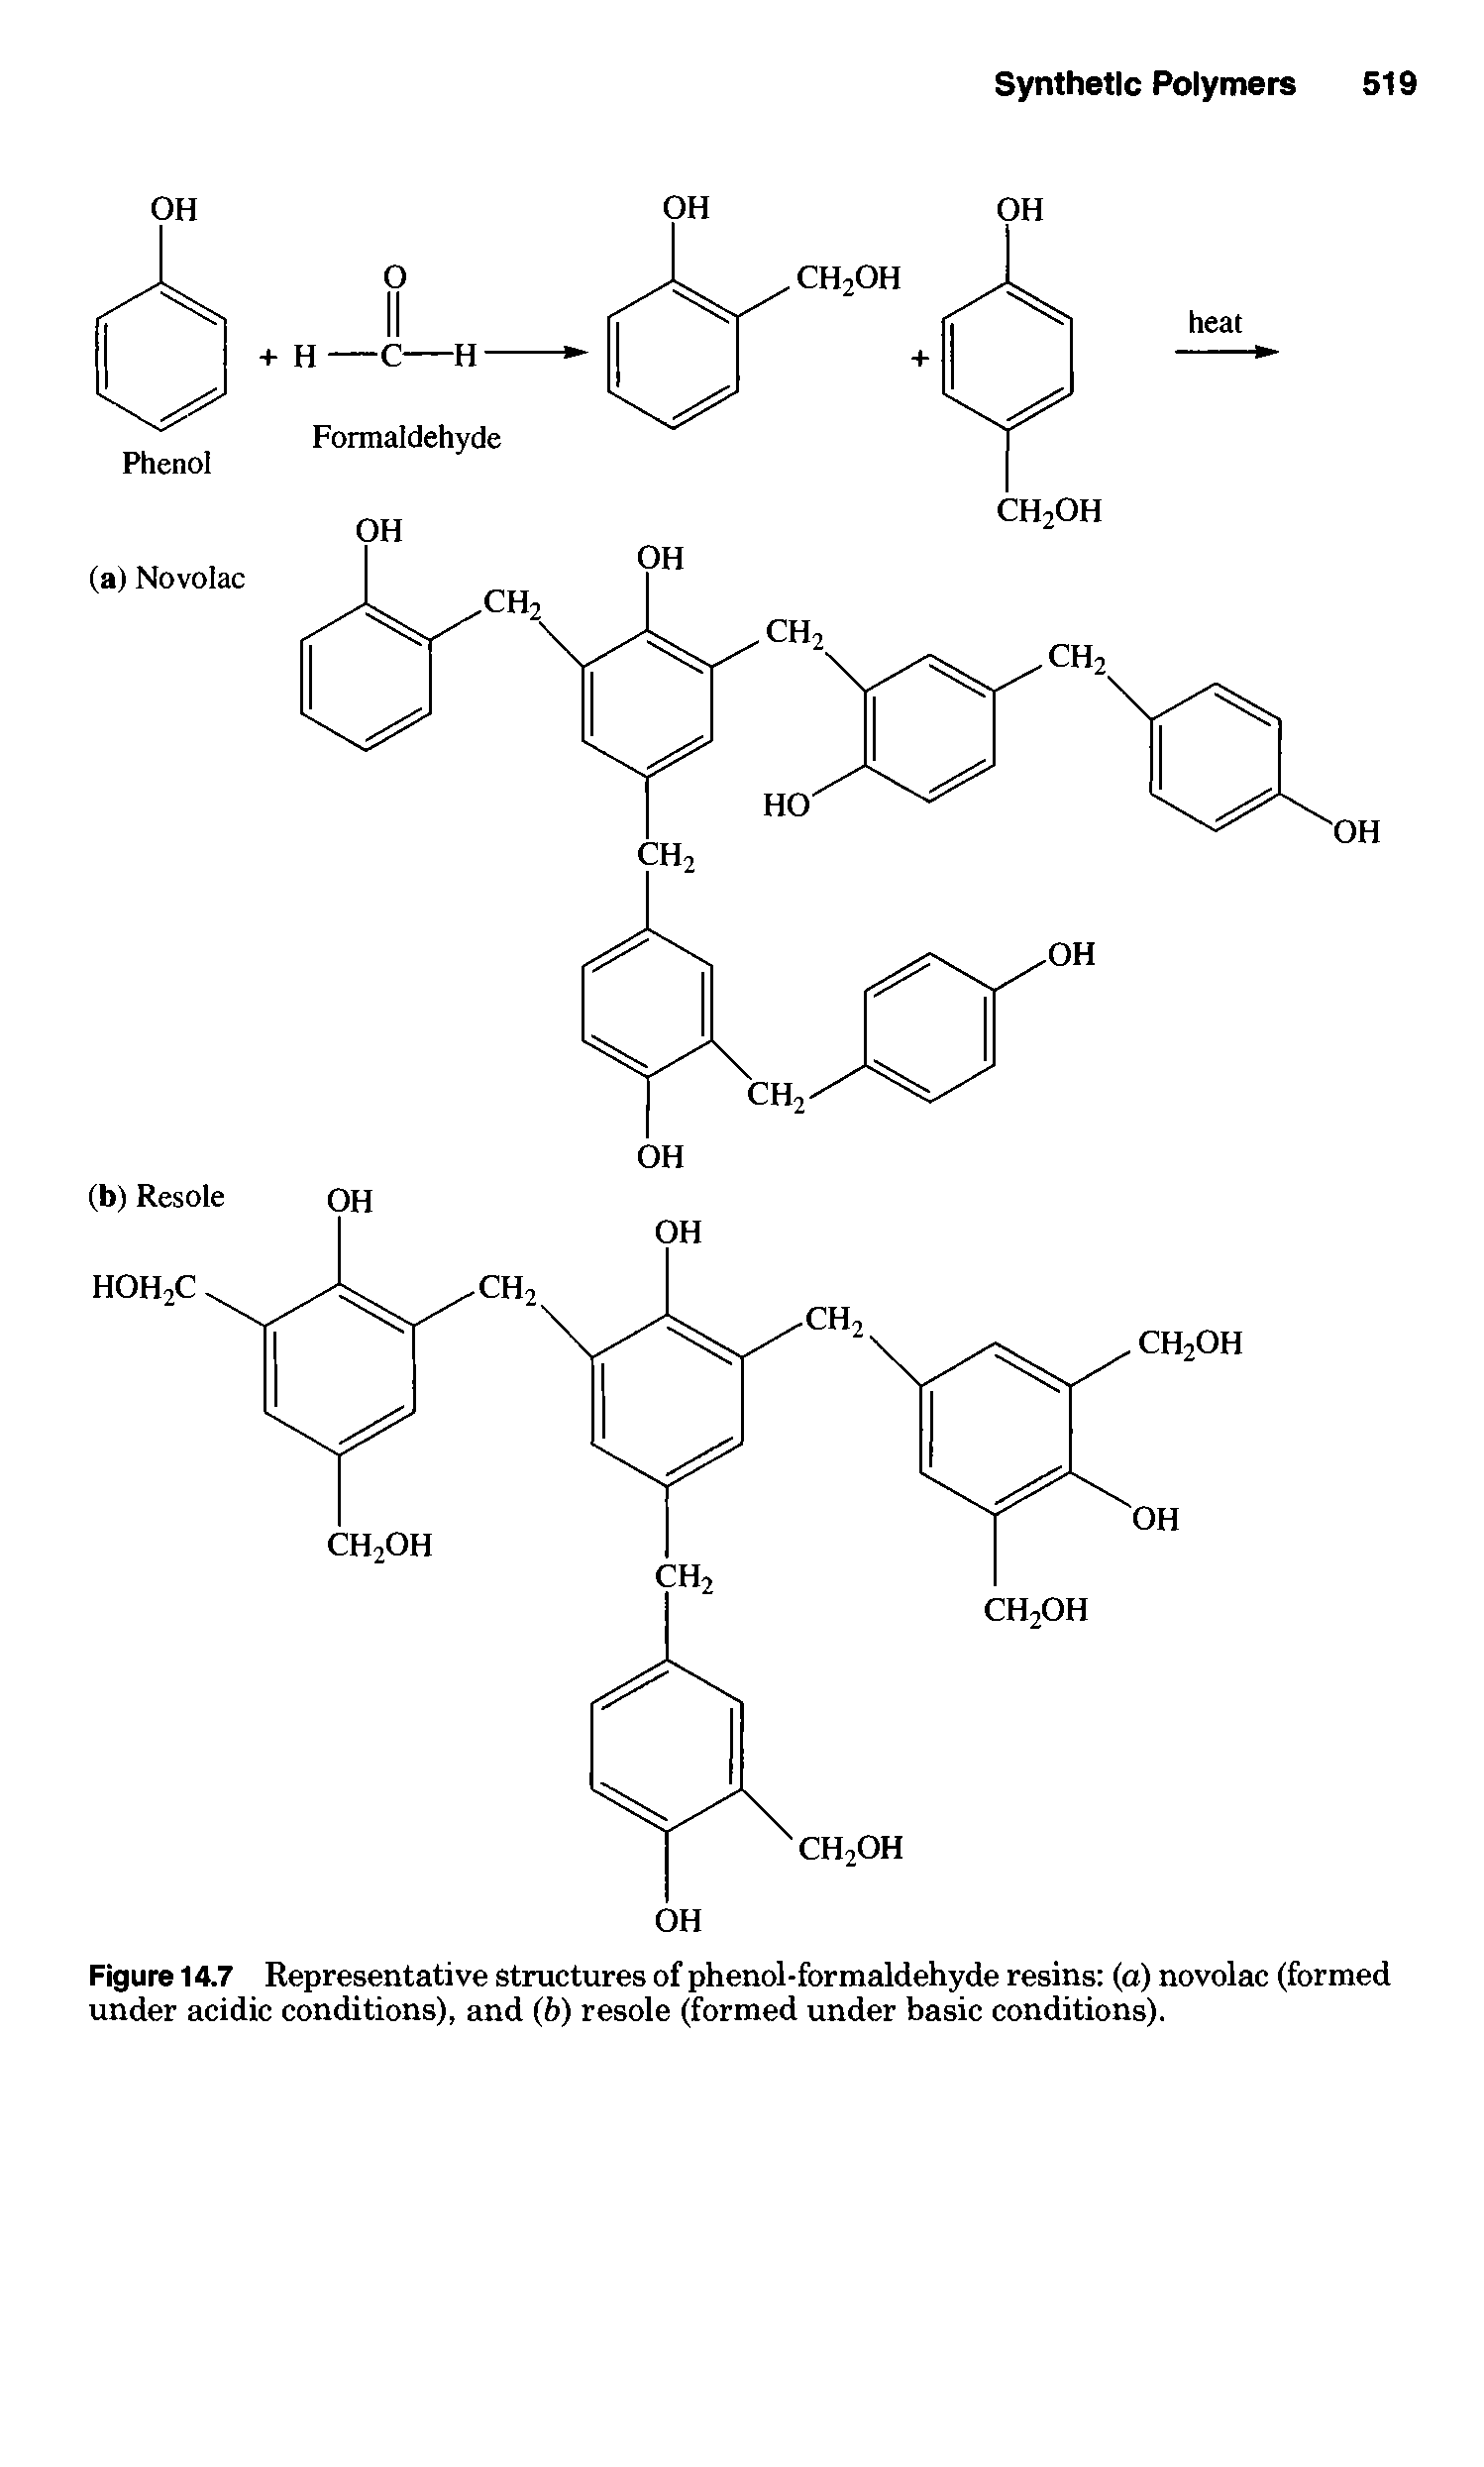 Figure 14.7 Representative structures of phenol-formaldehyde resins (a) novolac (formed under acidic conditions), and (b) resole (formed under basic conditions).